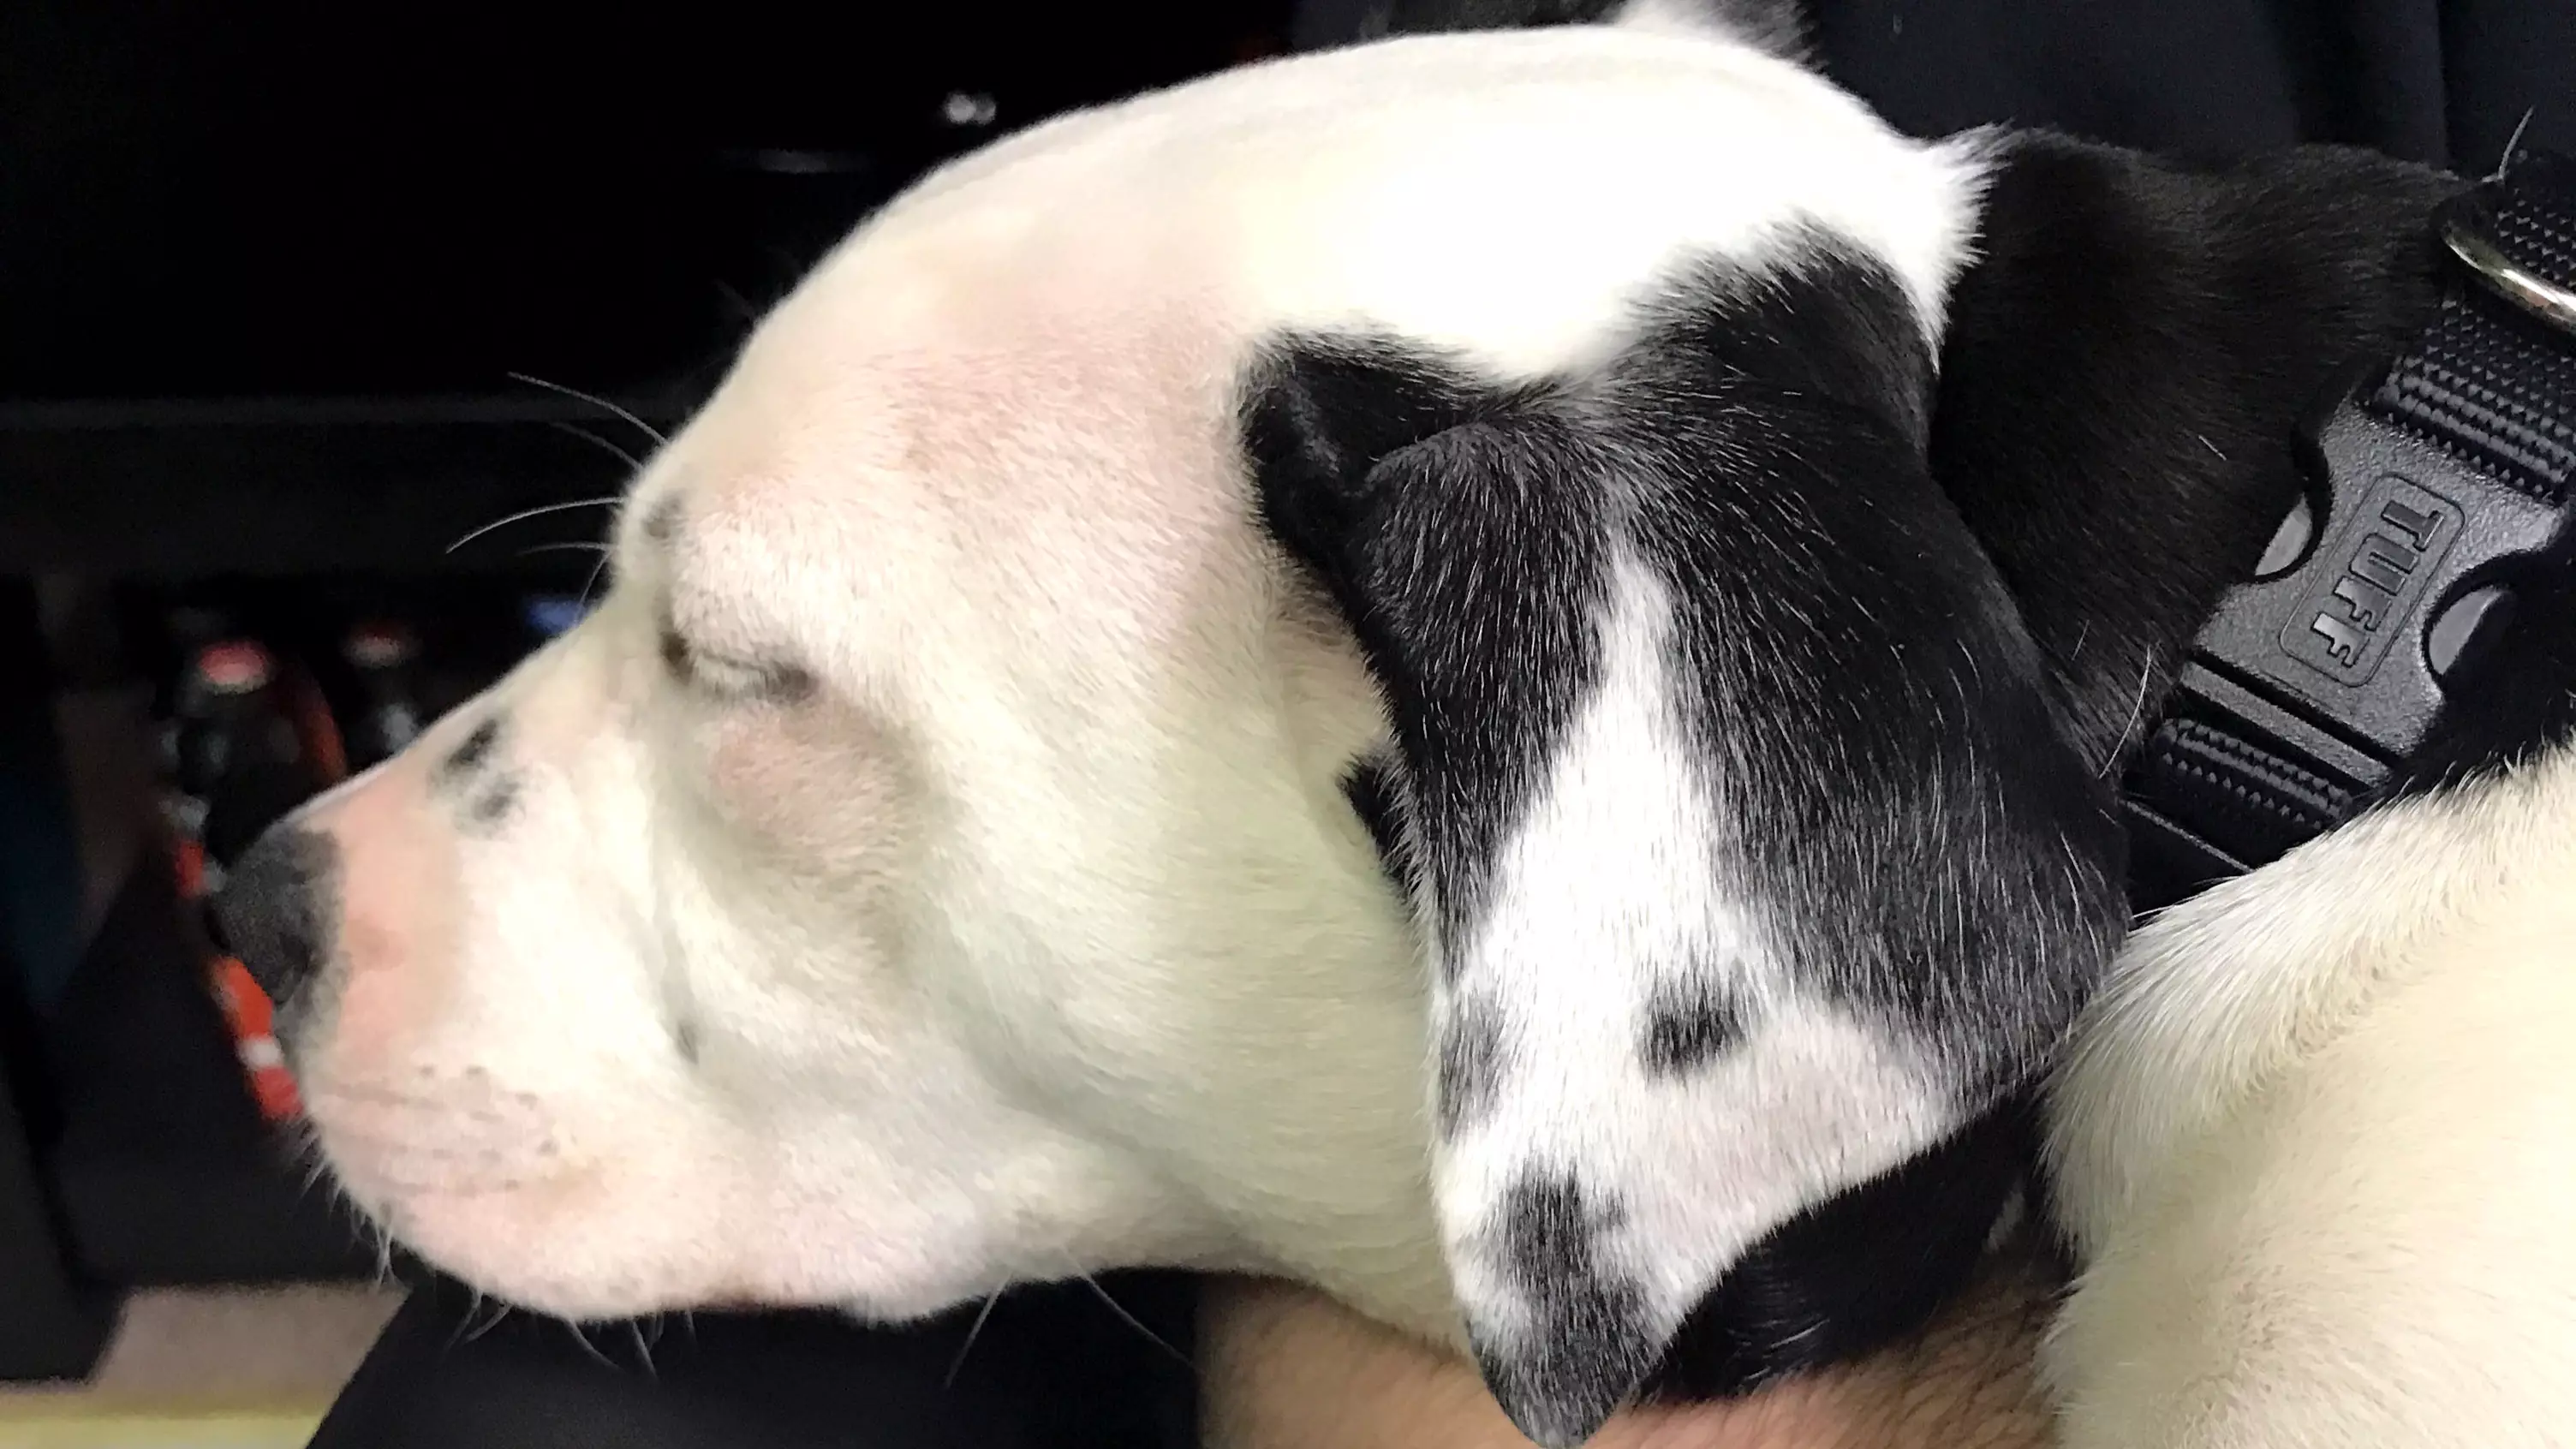 Puppy Has Perfect Selfie in Markings on Her Ear